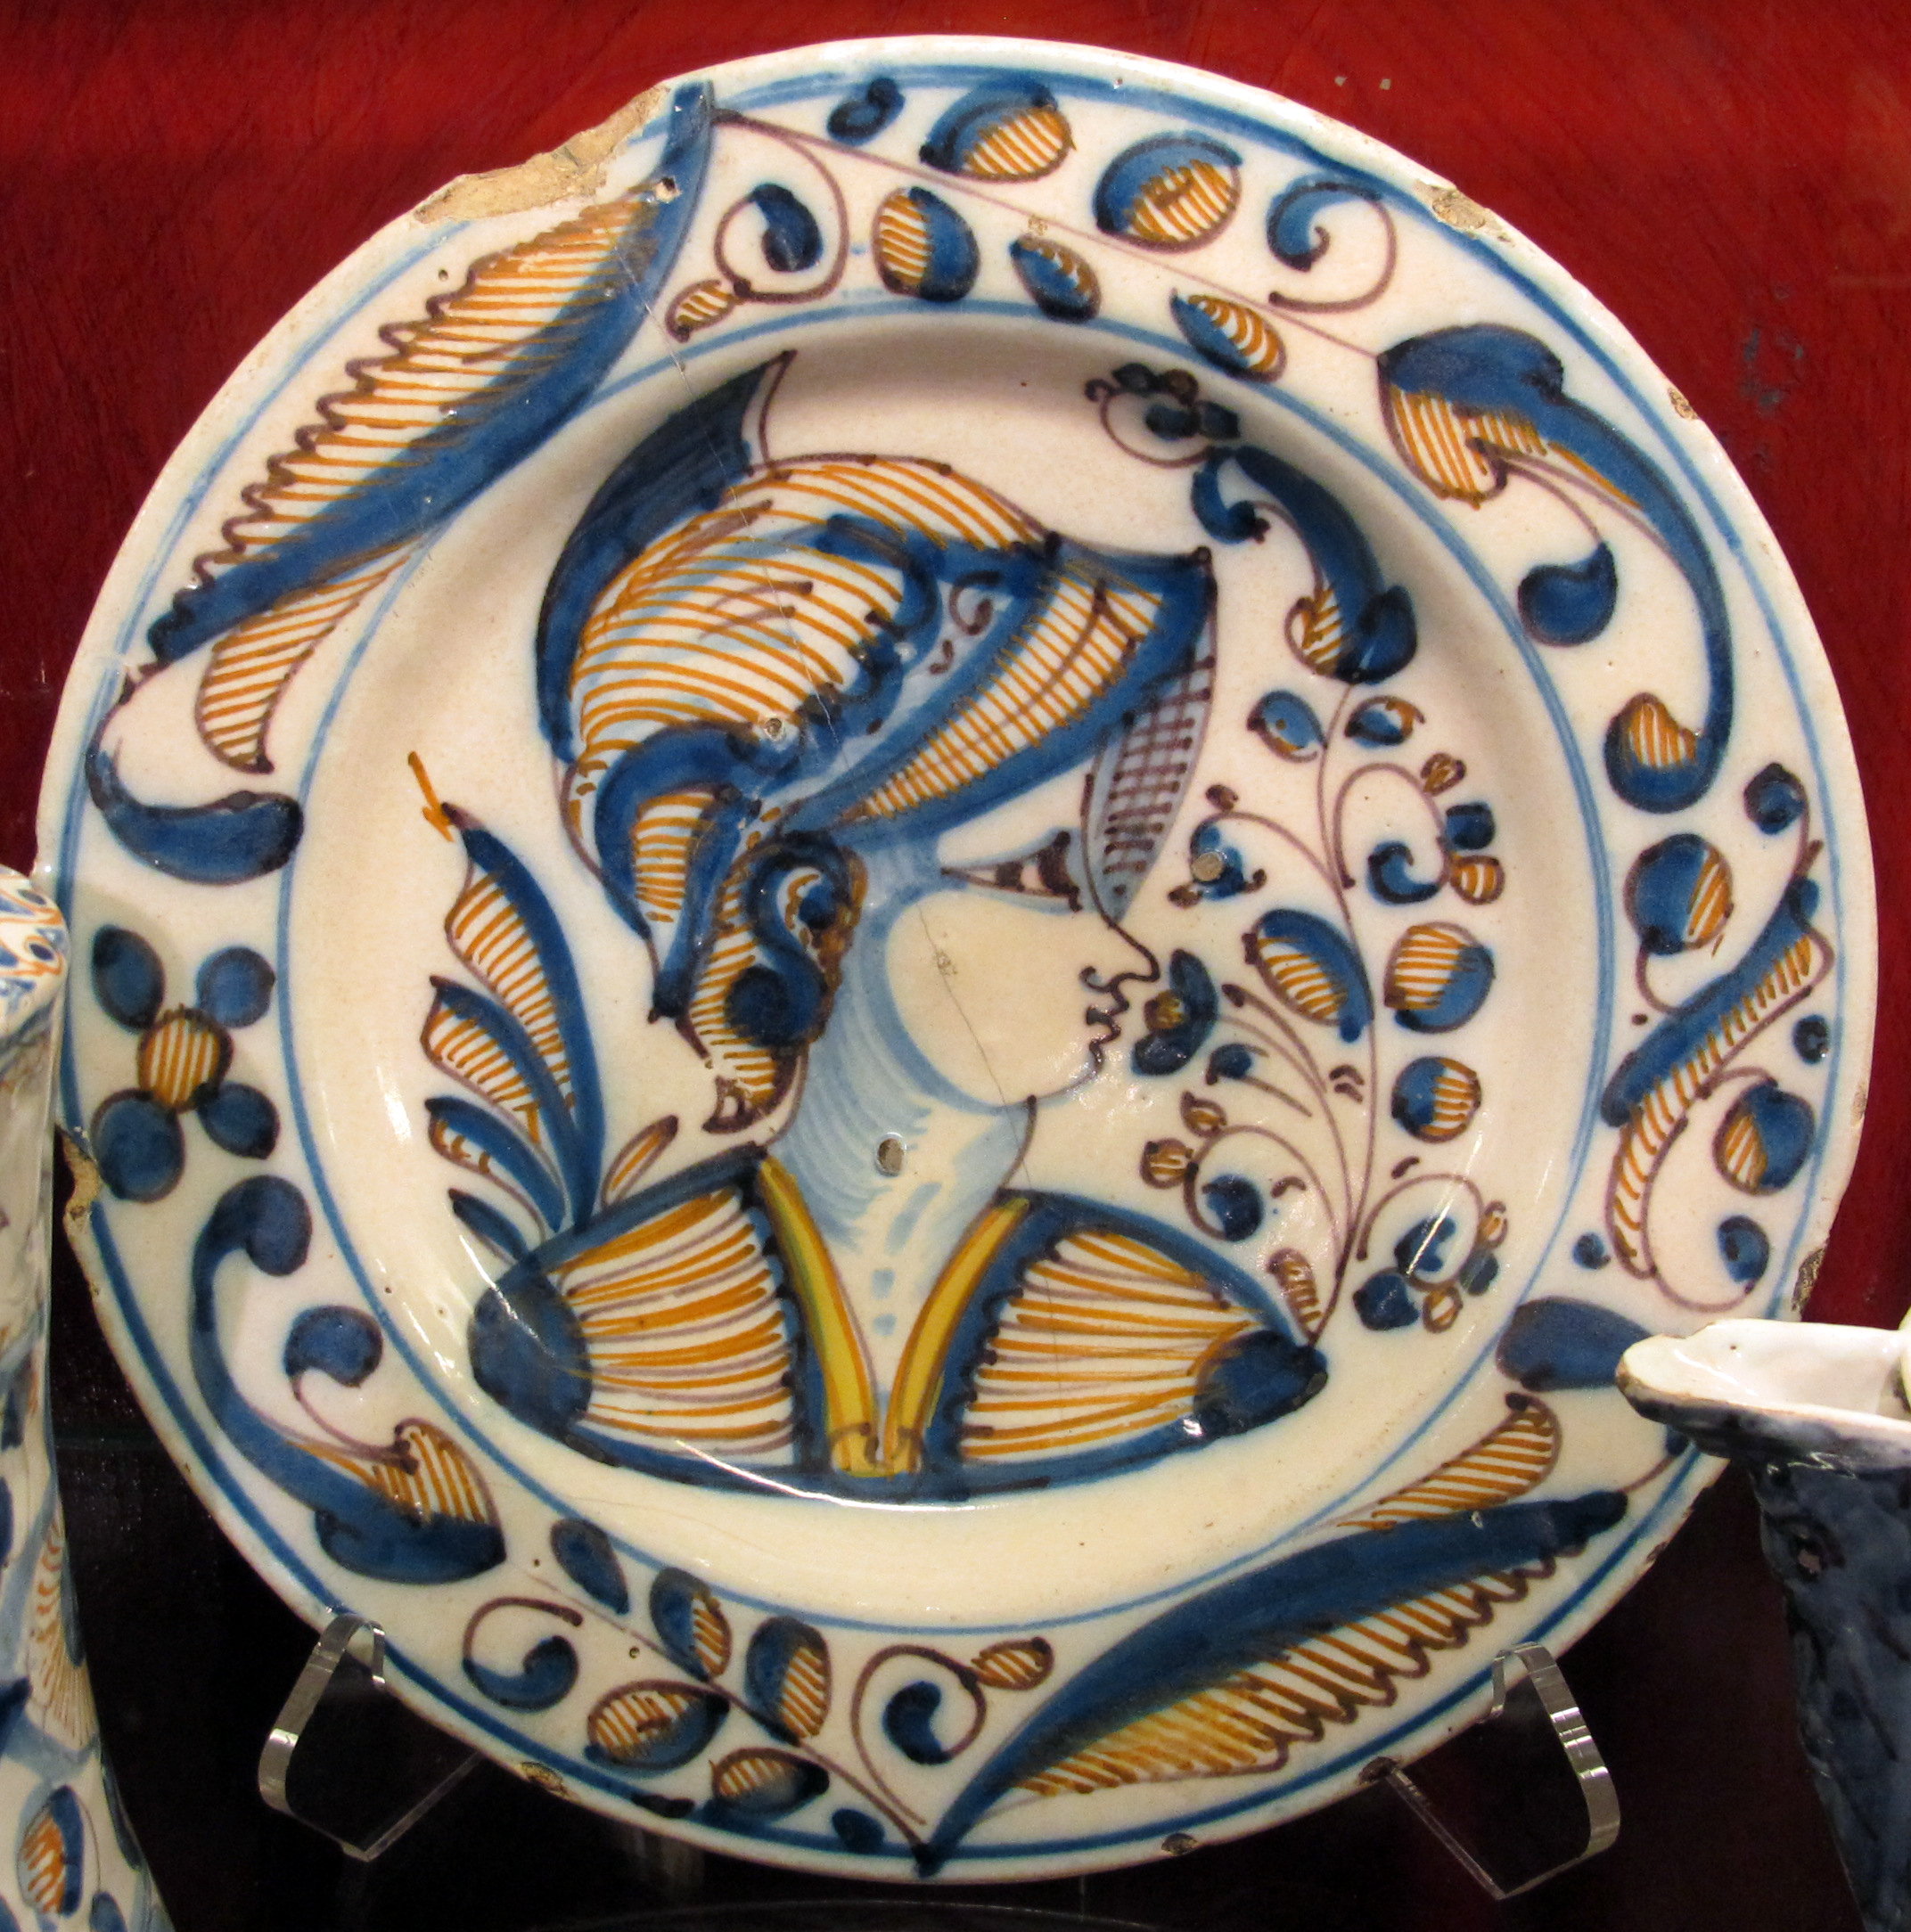 Talavera de la Reina pottery - Wikipedia